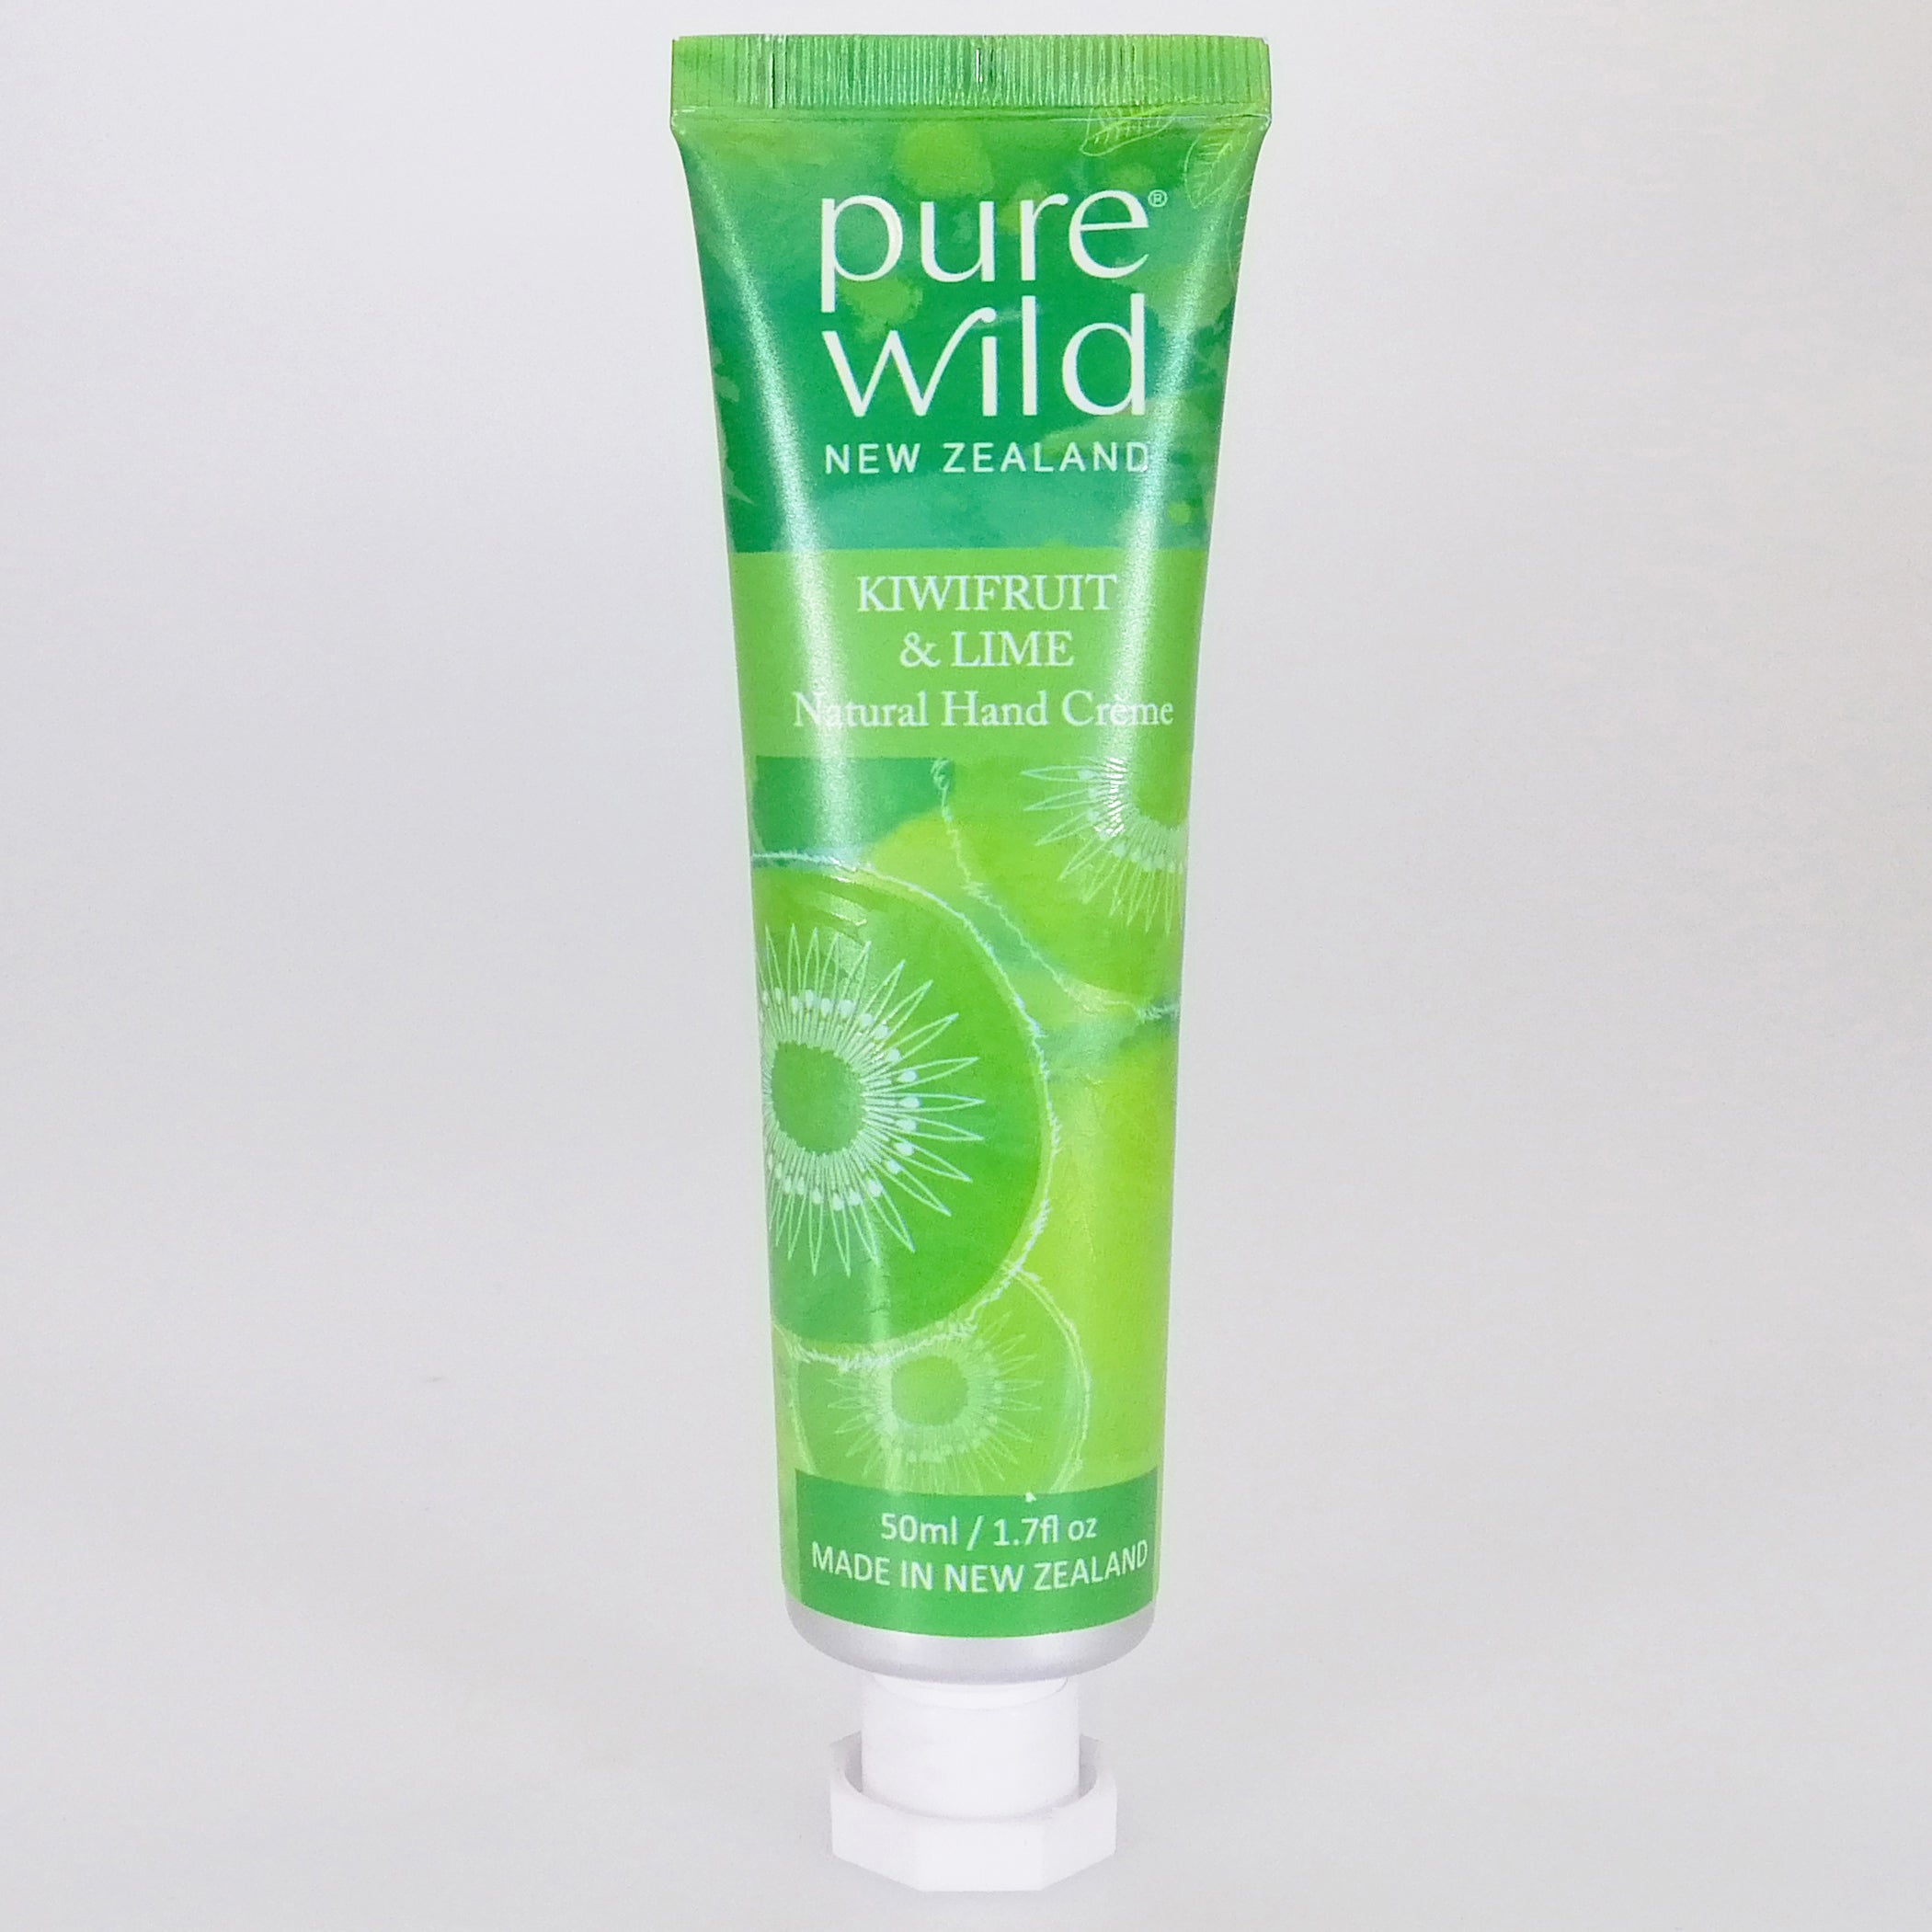 Pure Wild Natural Hand Creme - Kiwifruit & Lime